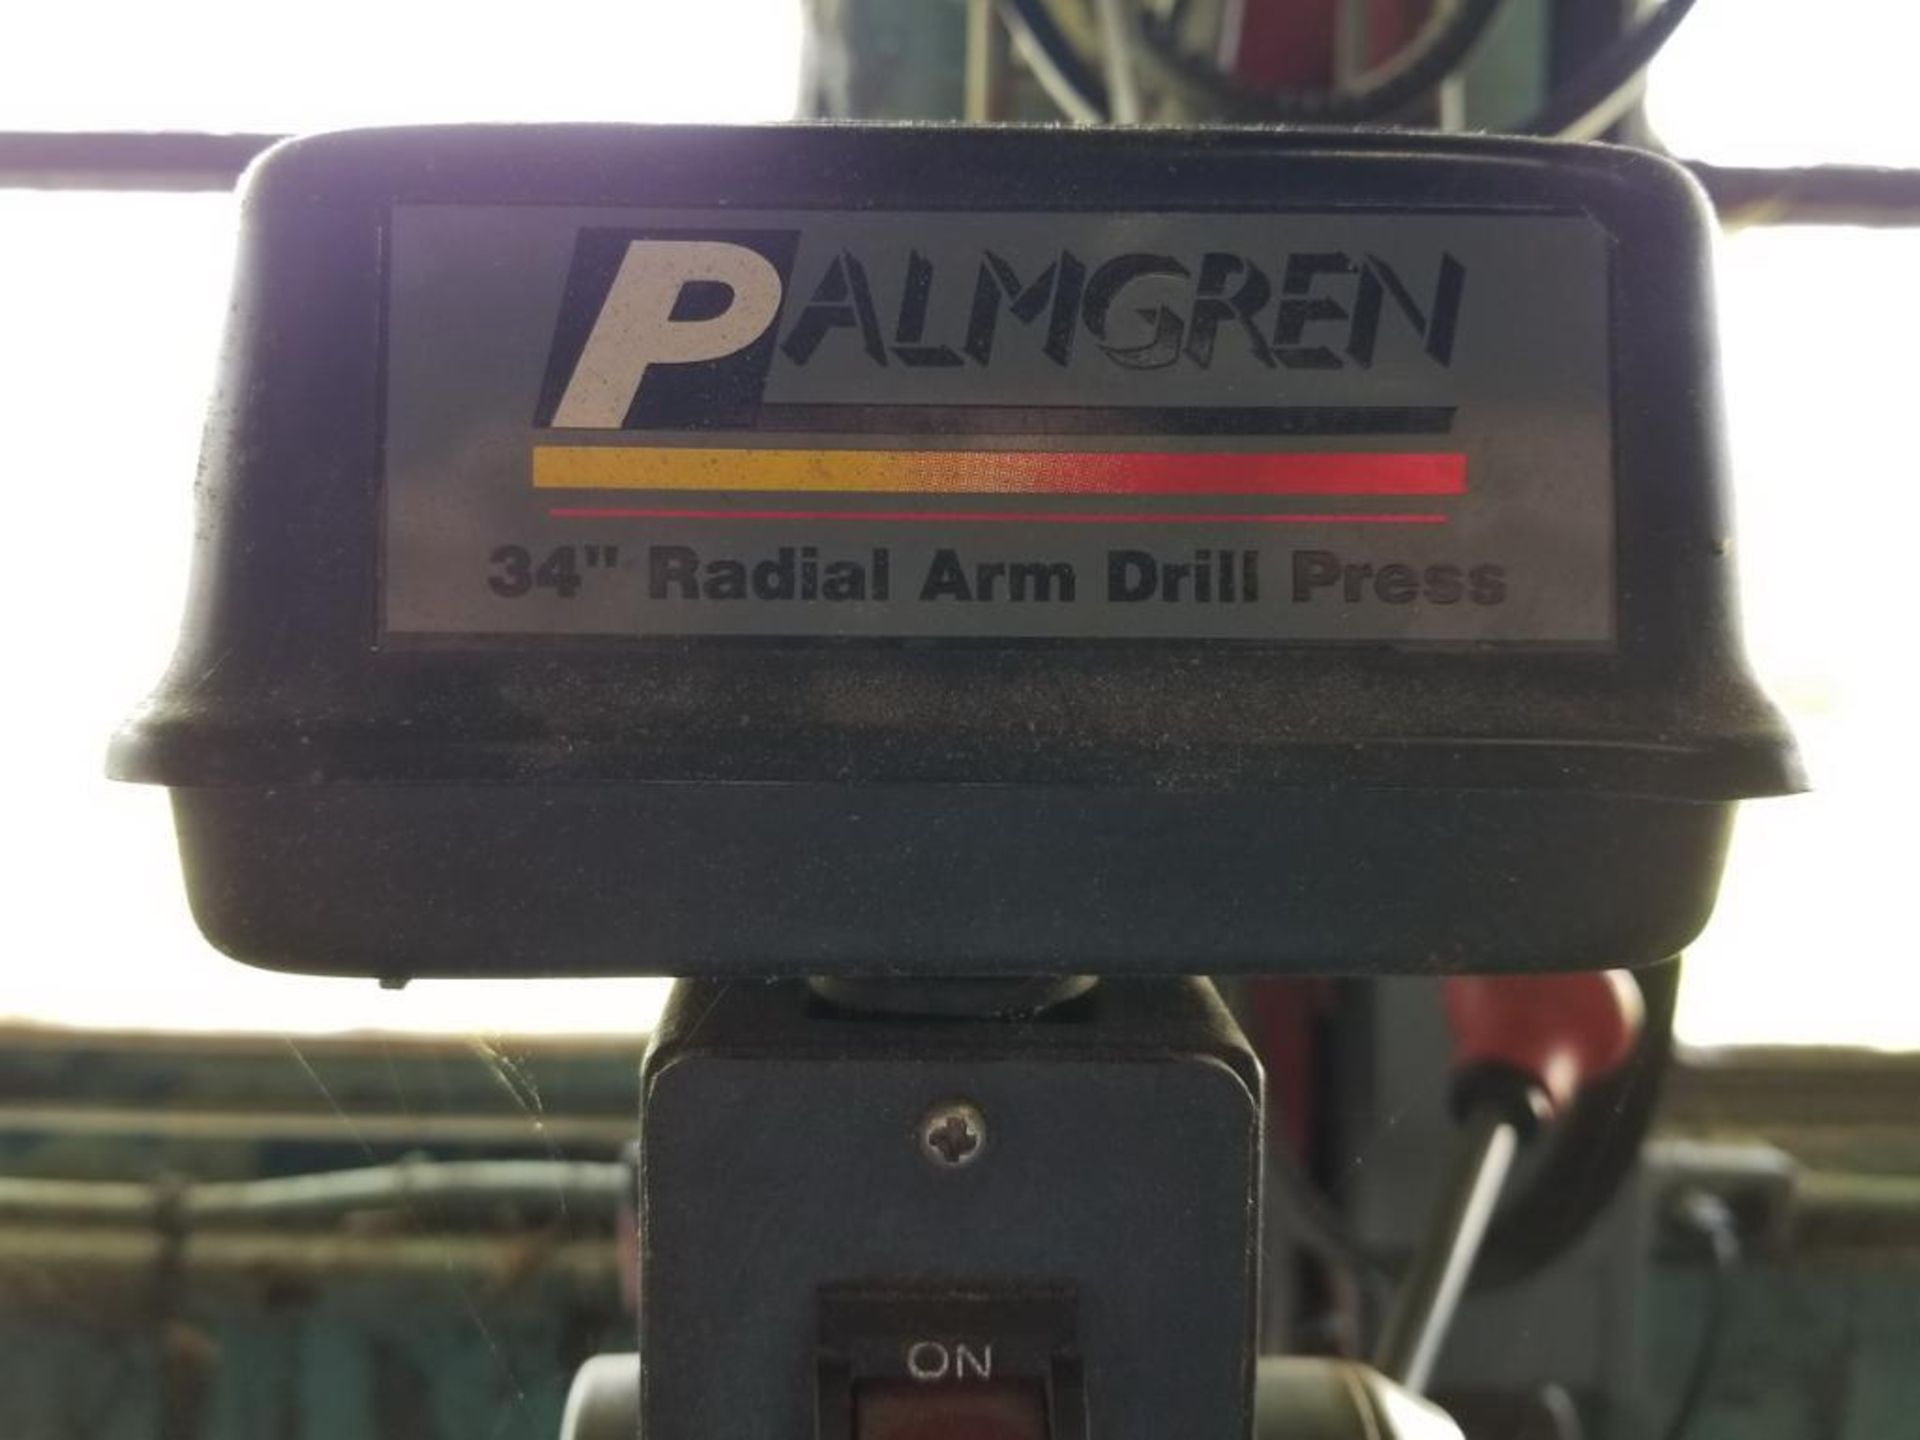 Palmgren Mdl. 80342 Radial Arm Drill Press - Image 2 of 3